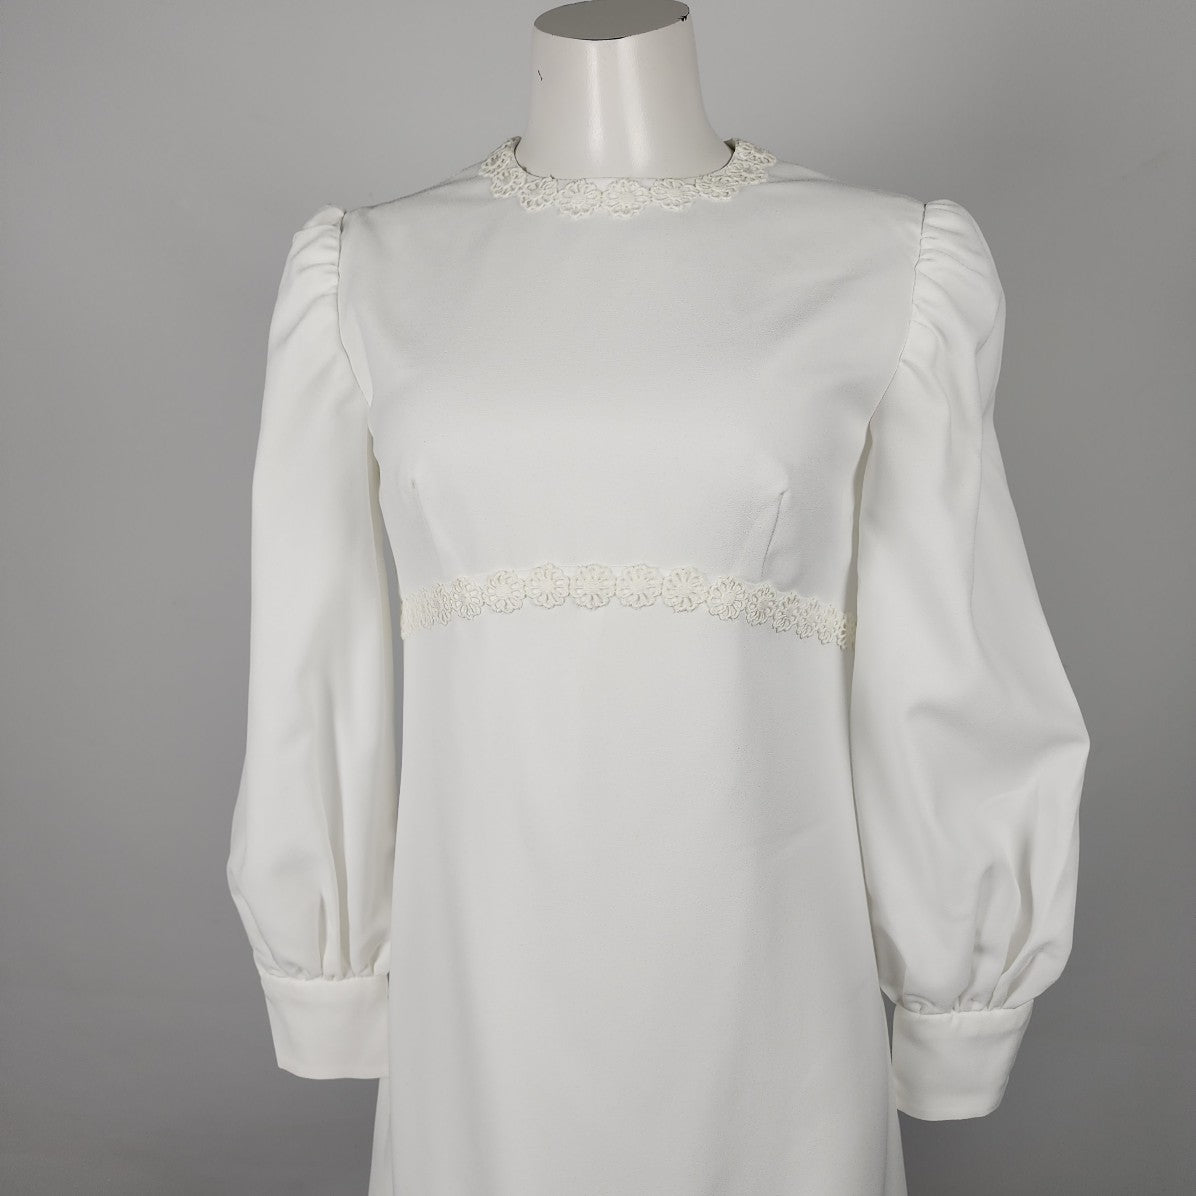 Vintage White Floral Two Piece Wedding Dress Size S